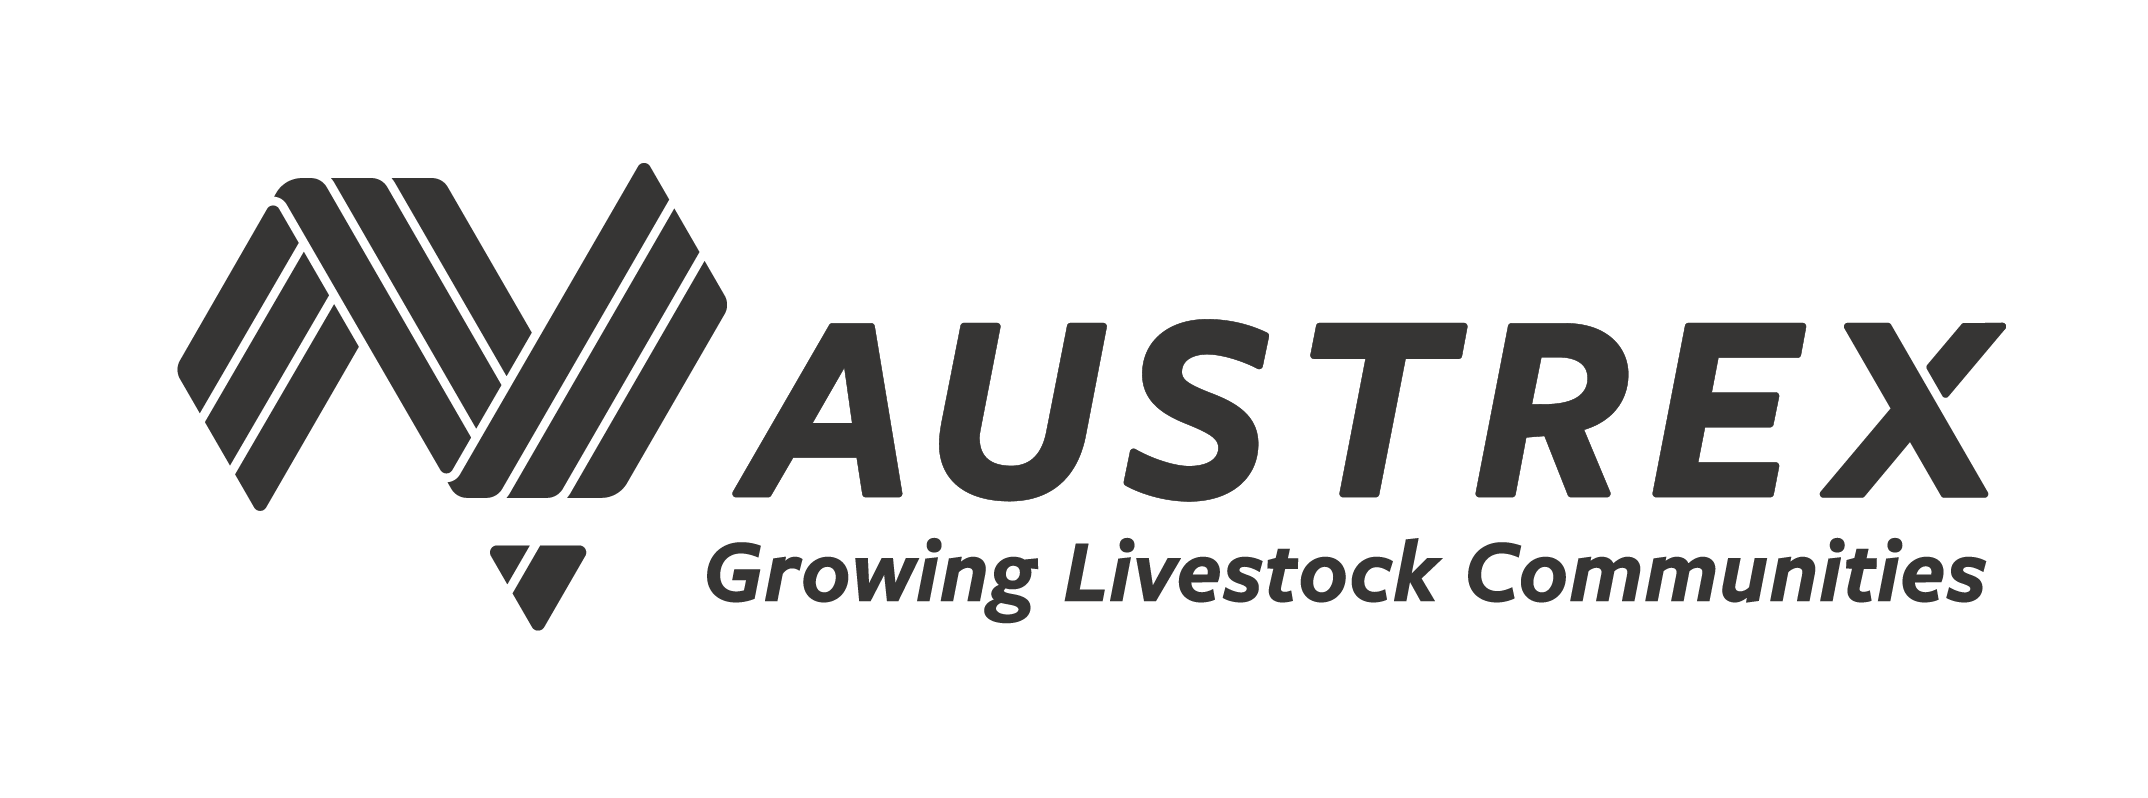 Austrex_Logo_BW_Primary.png